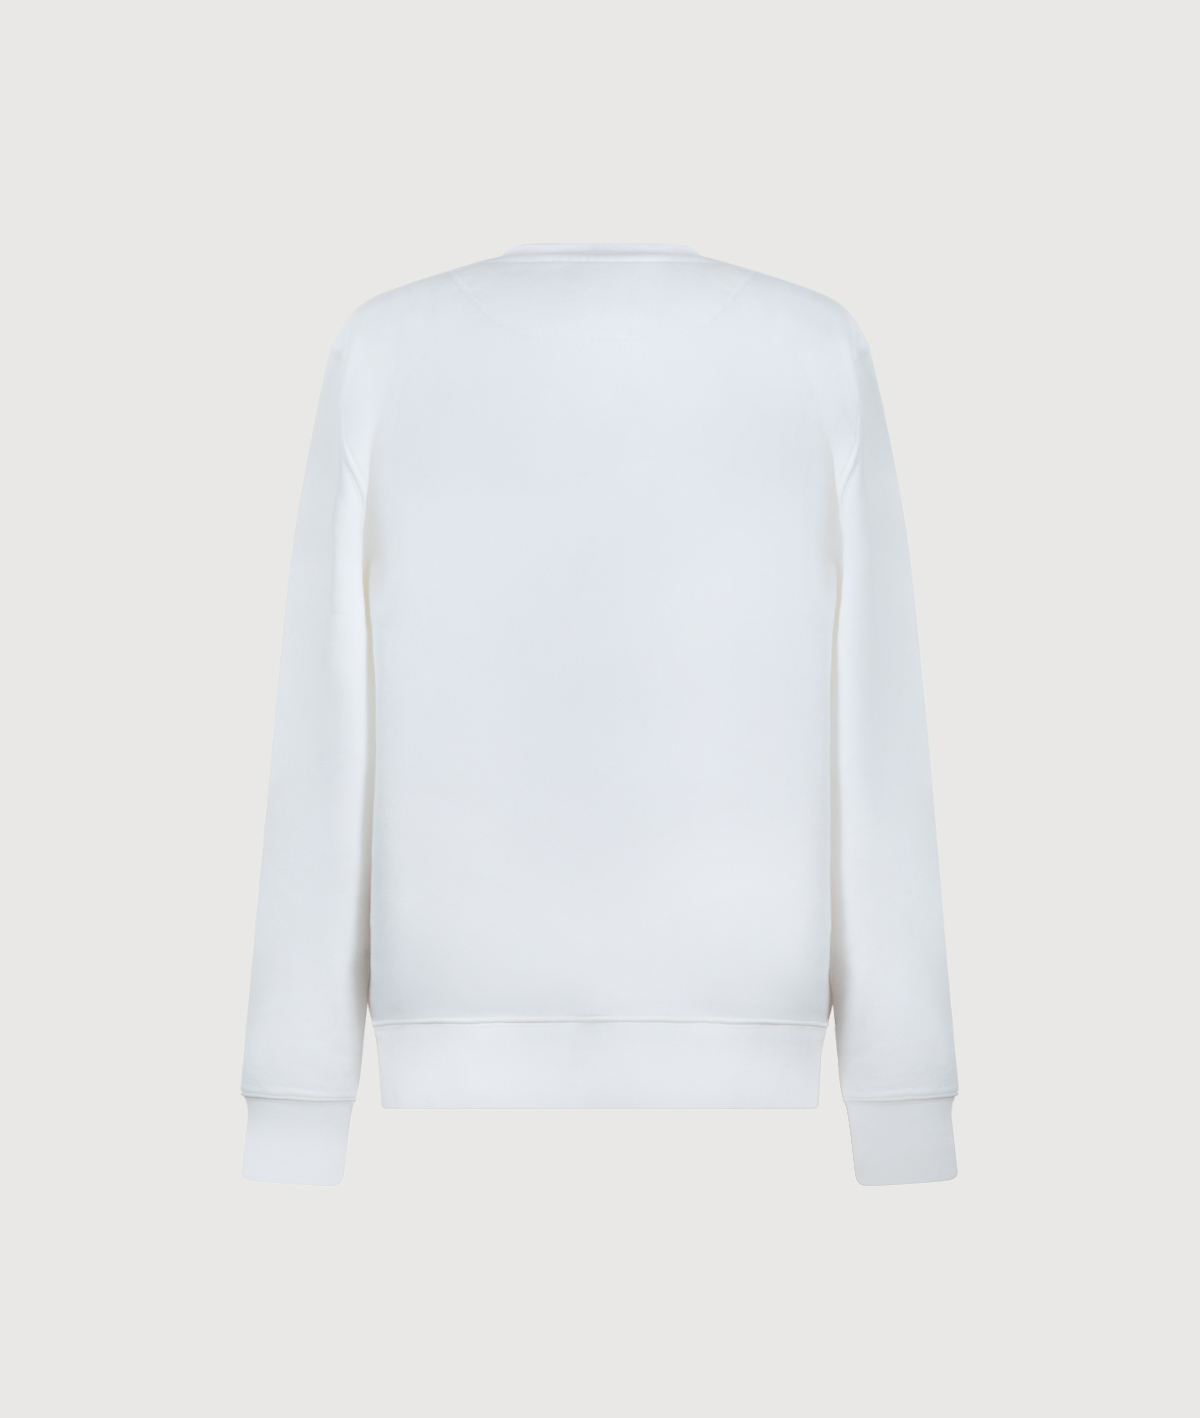 Changer SM IEU Sweatshirt. White colour back